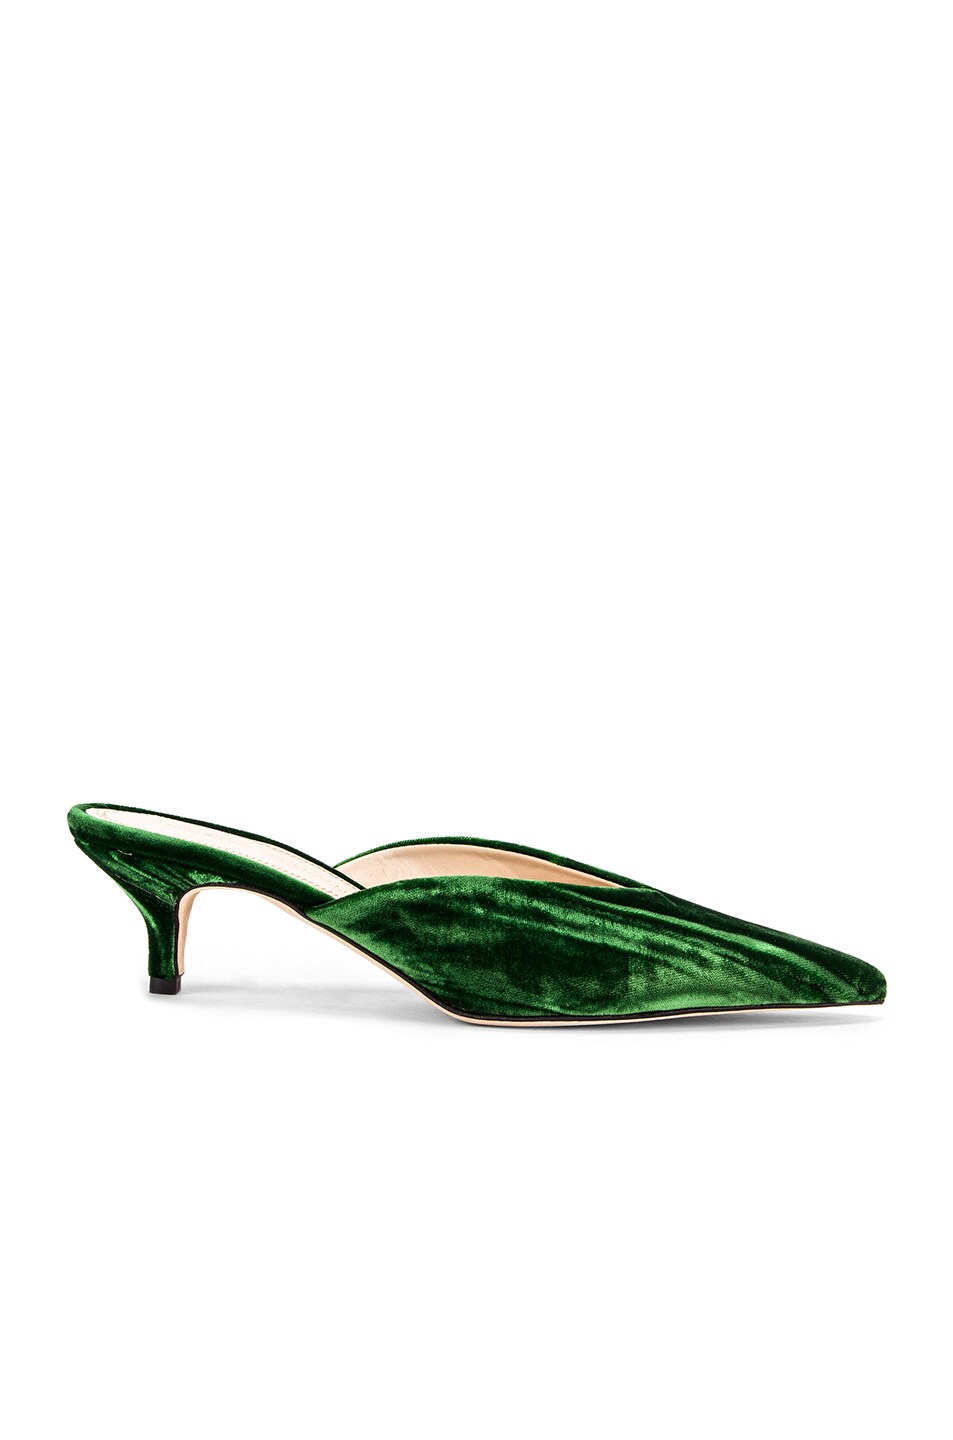 Image 1 of SILVIA TCHERASSI x Gia Couture Bandana Girl Slide in Emerald Green